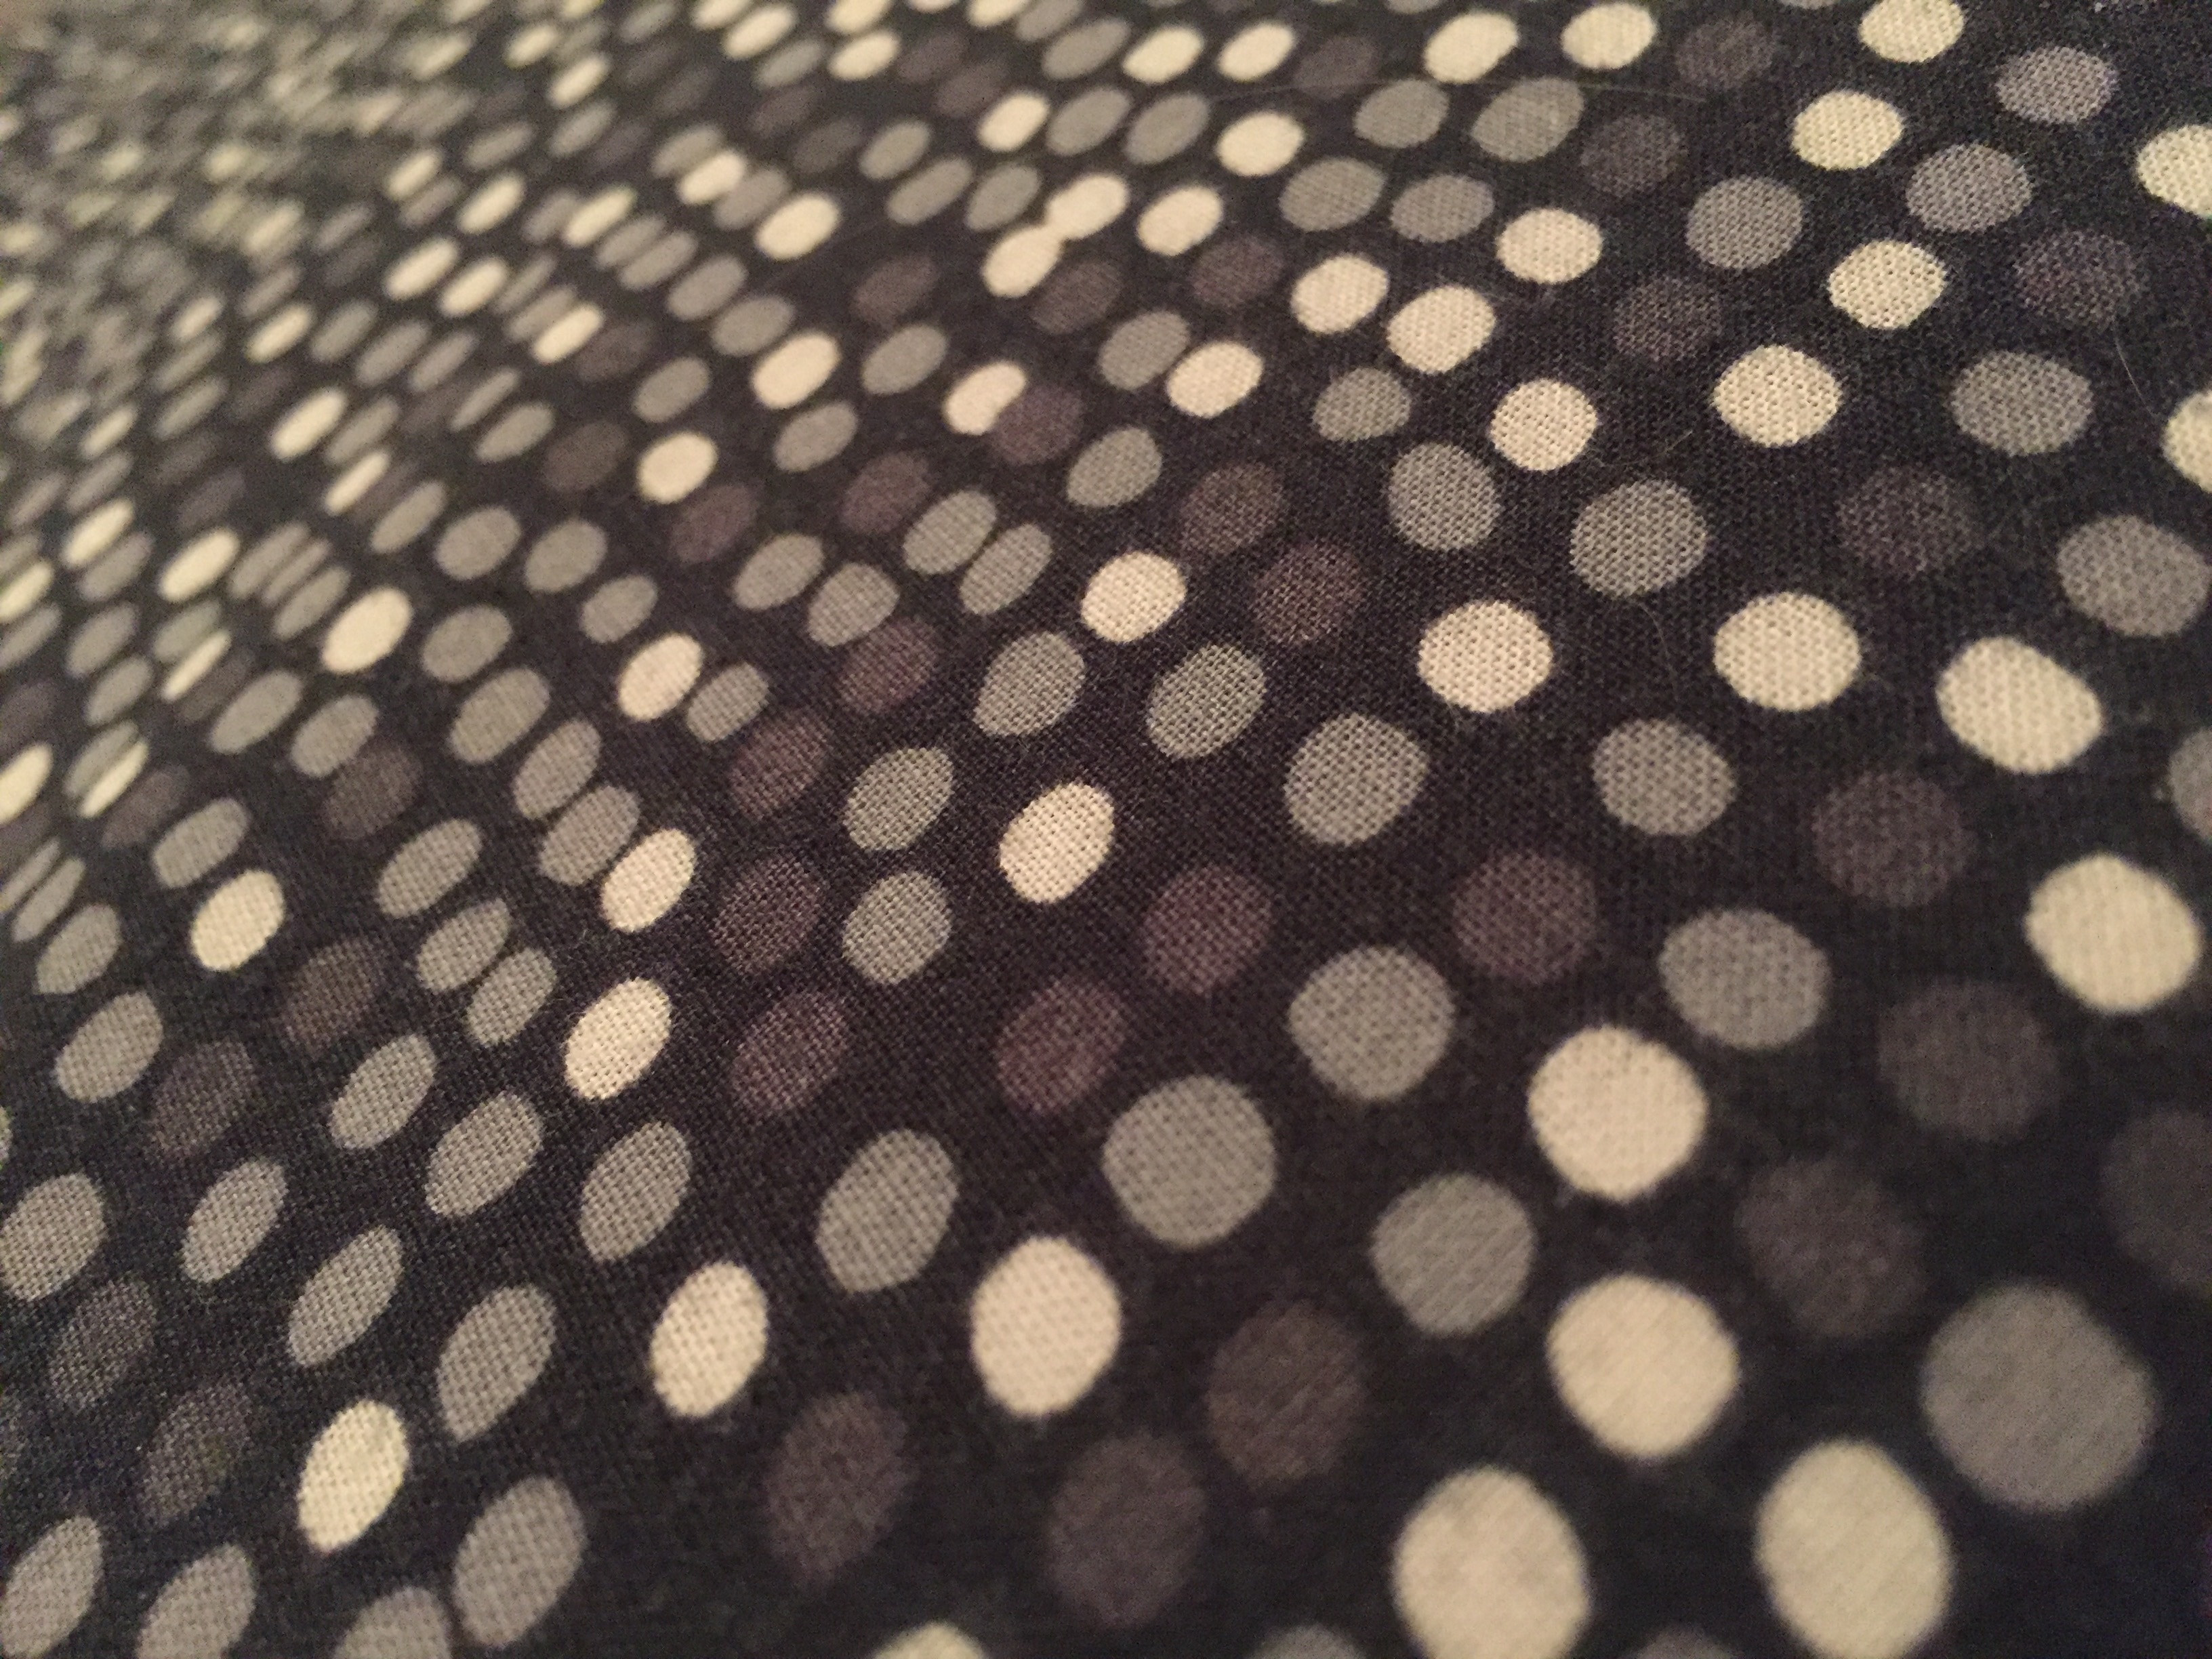 white and black polka dot textile